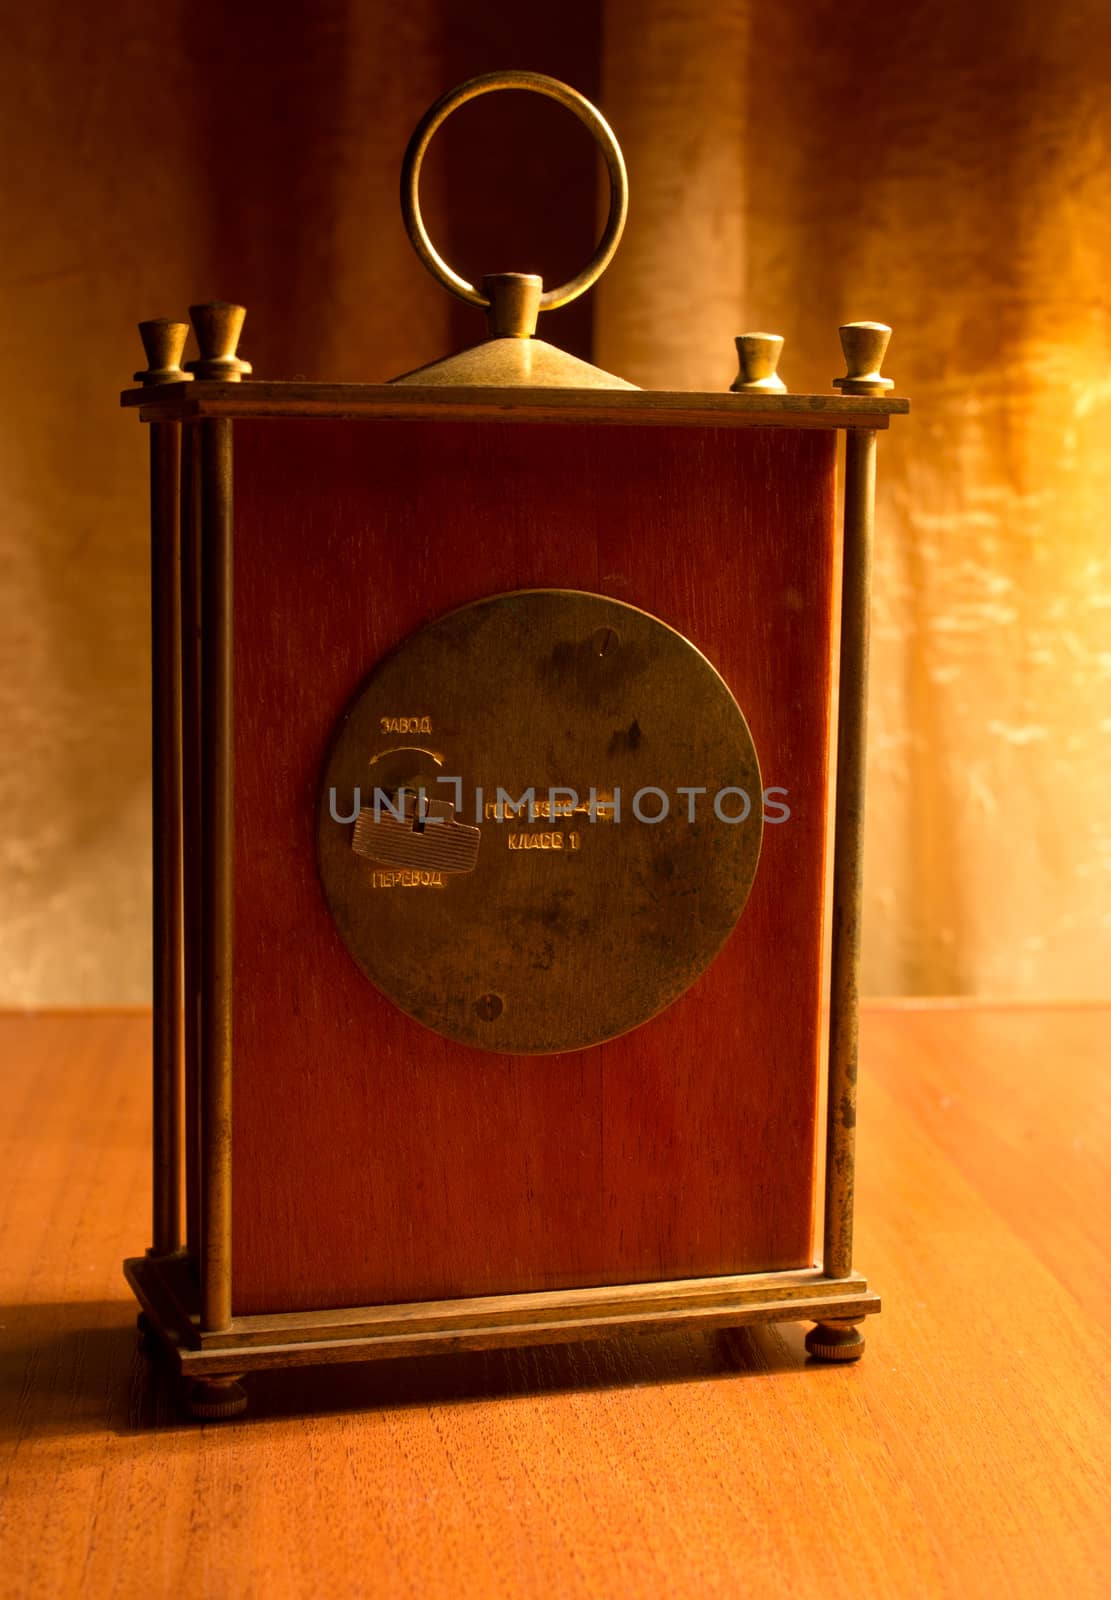 back side clock on wooden table, warm light